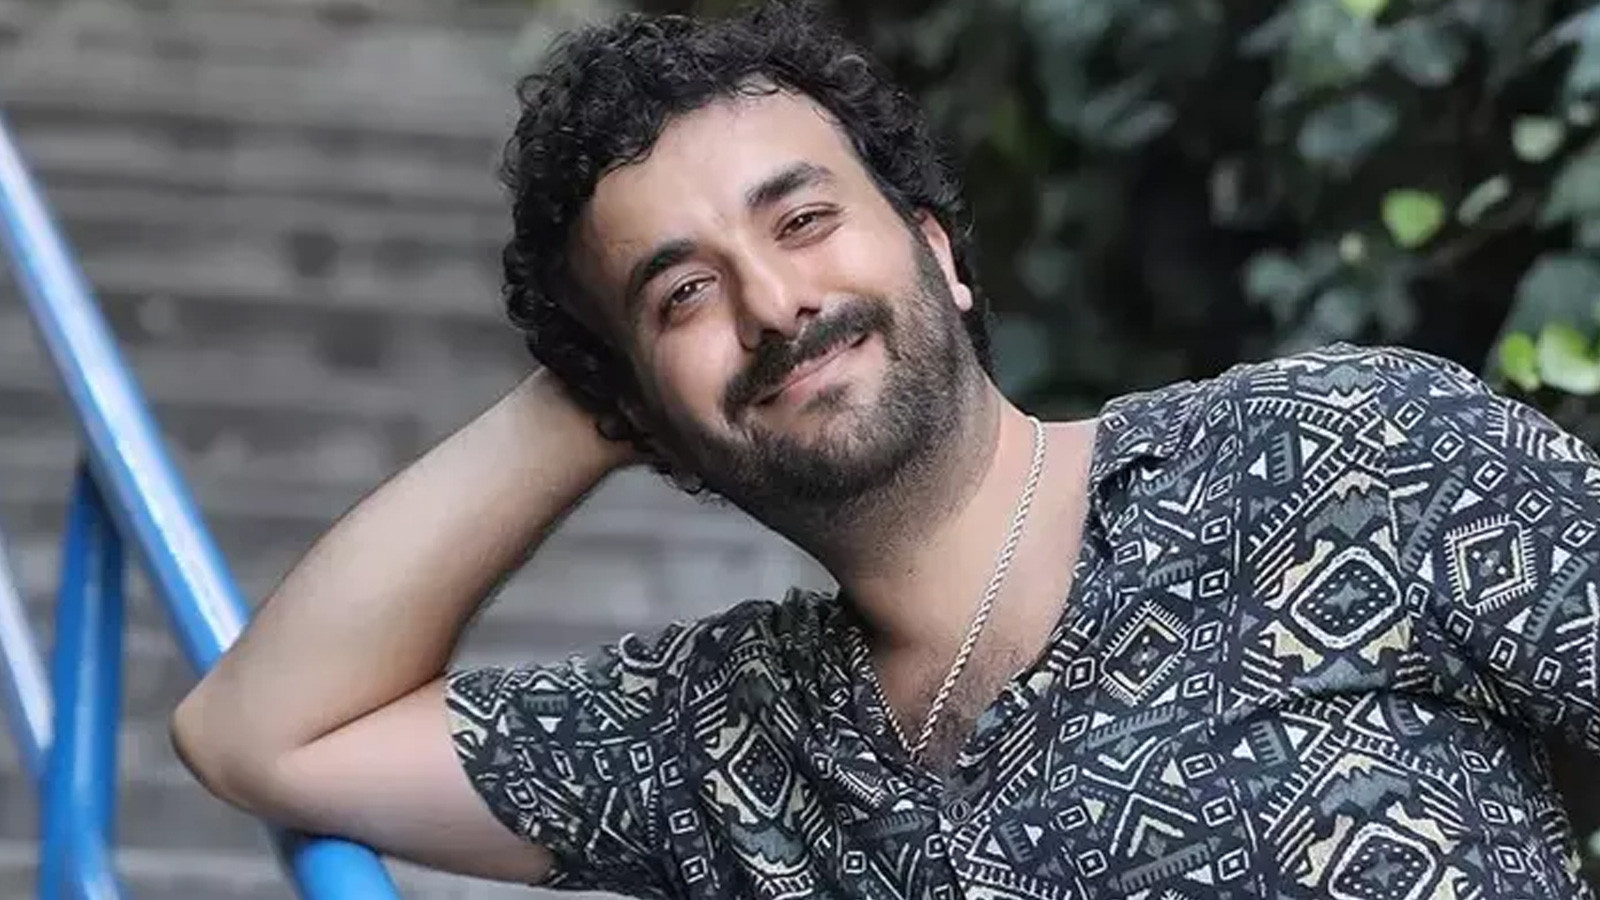 Komedyen Hasan Can Kaya acil ameliyata alındı